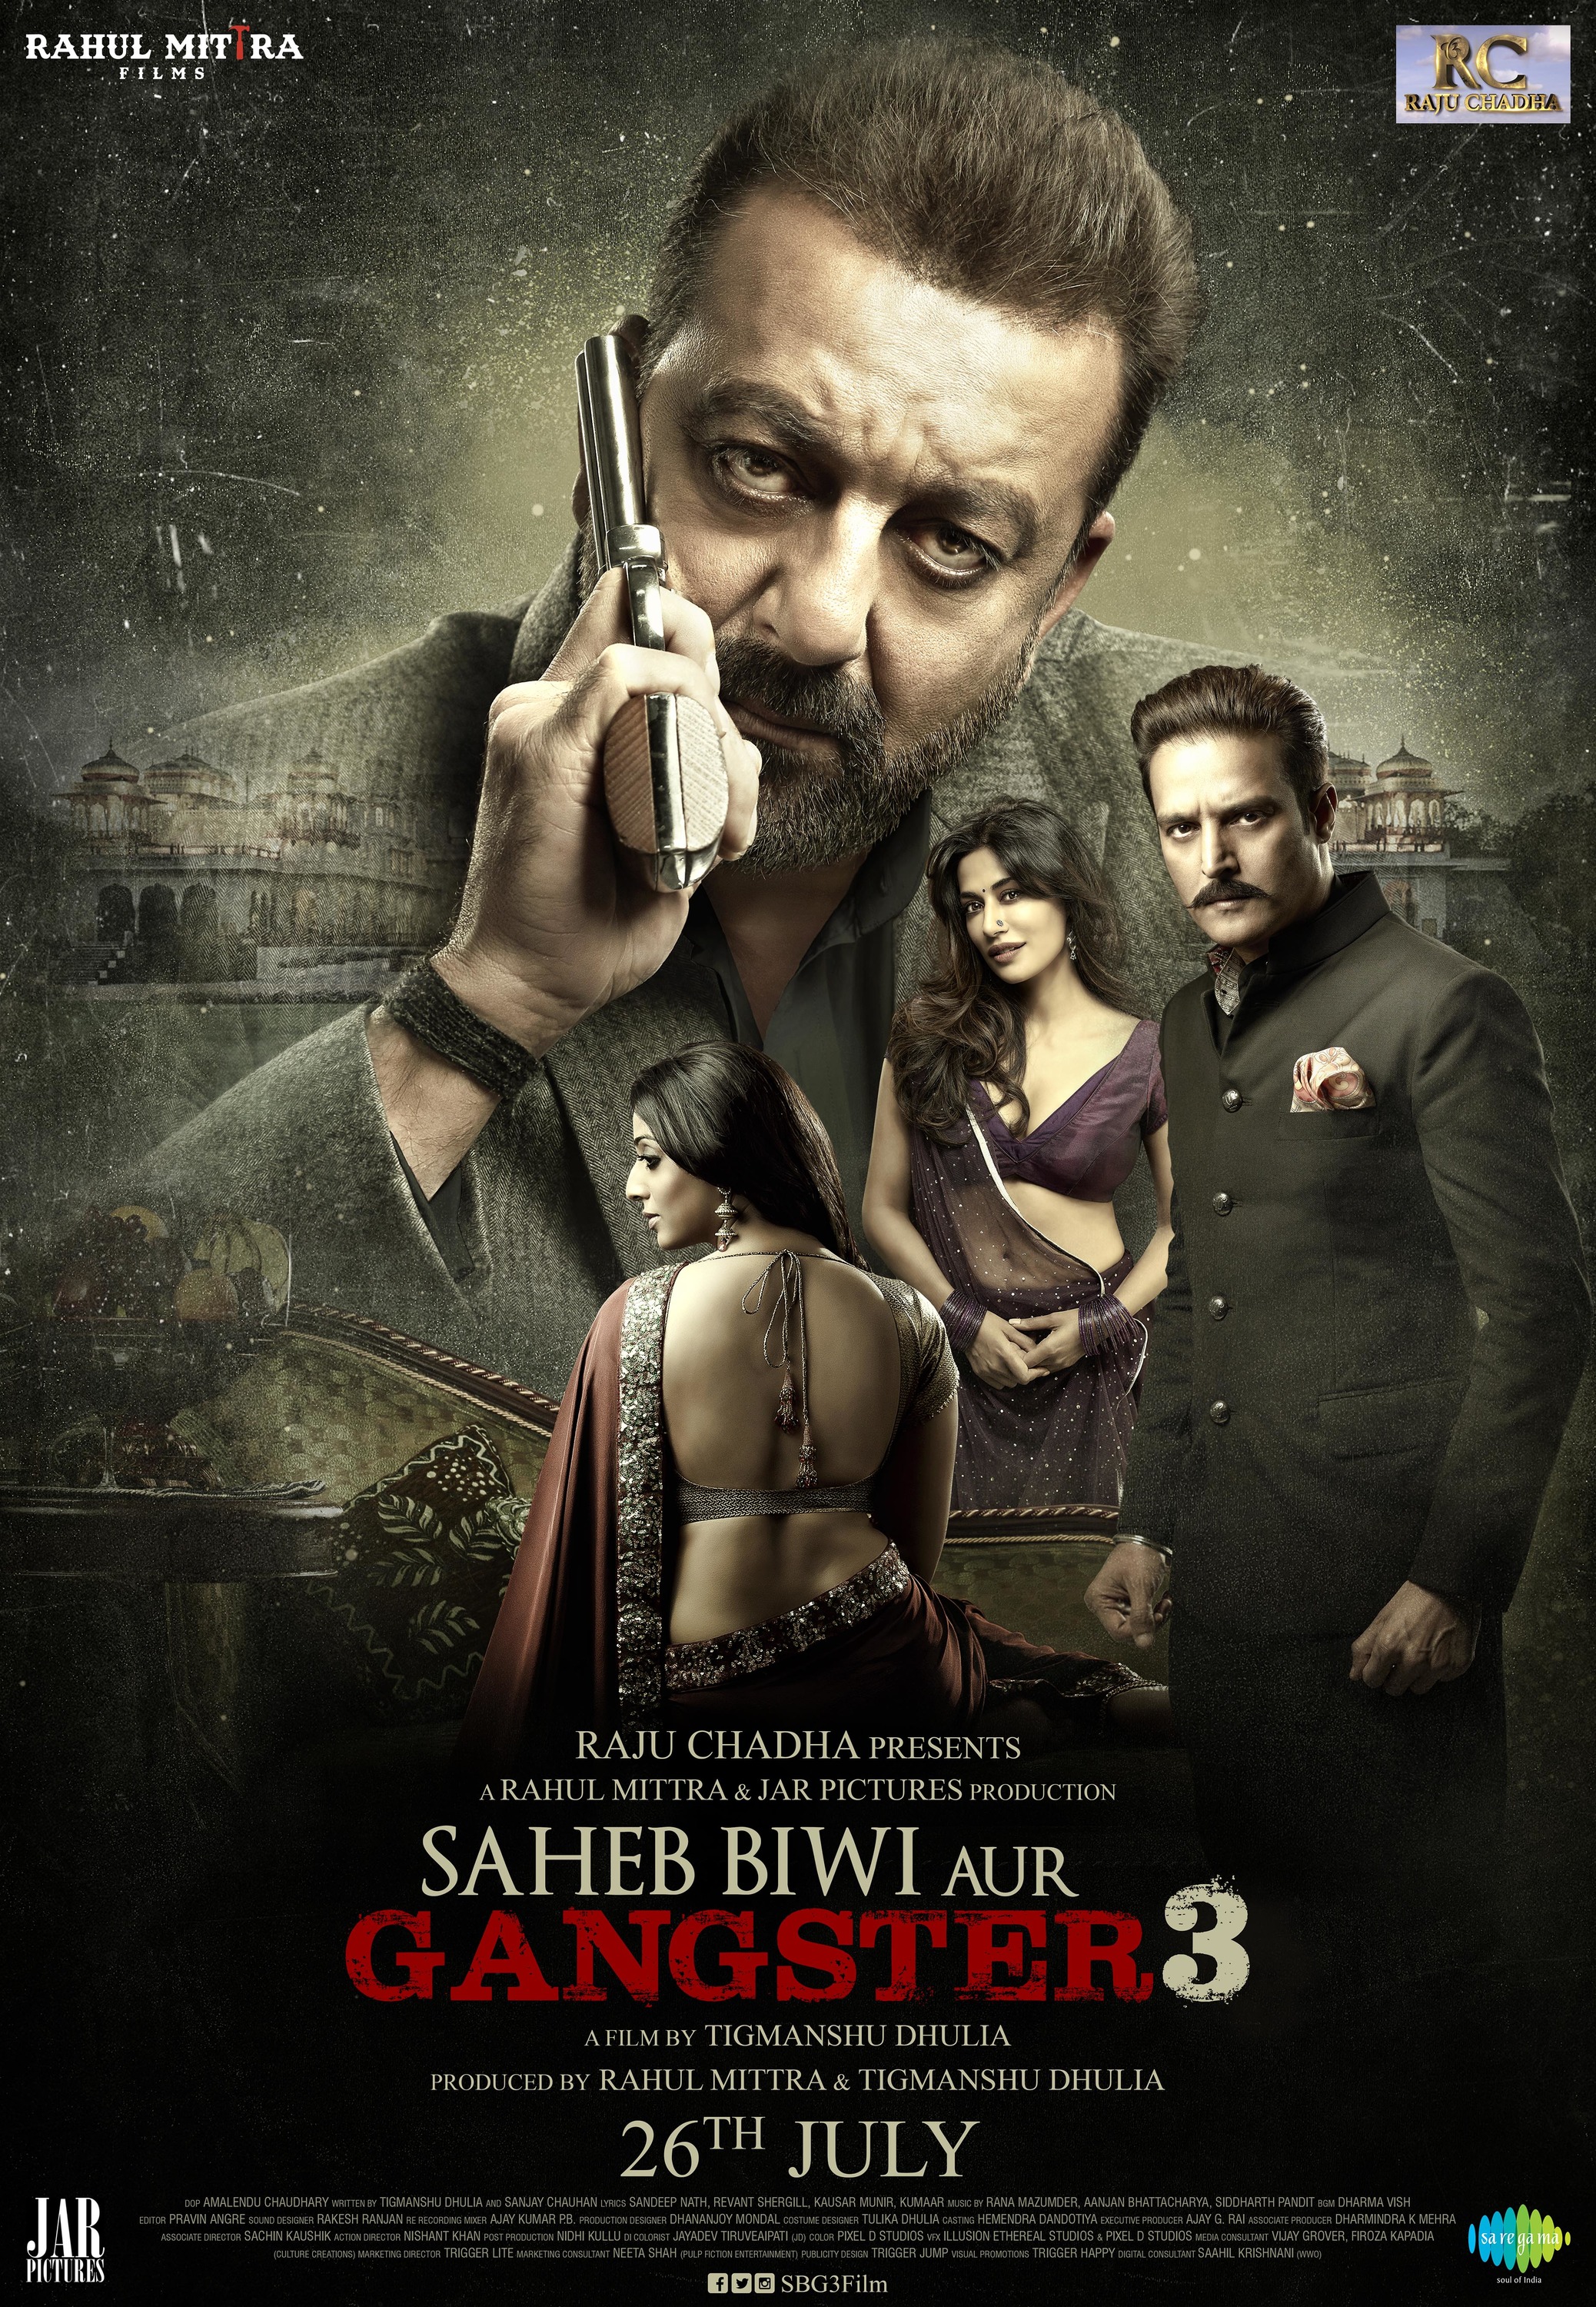 Mega Sized Movie Poster Image for Saheb Biwi Aur Gangster 3 (#4 of 4)